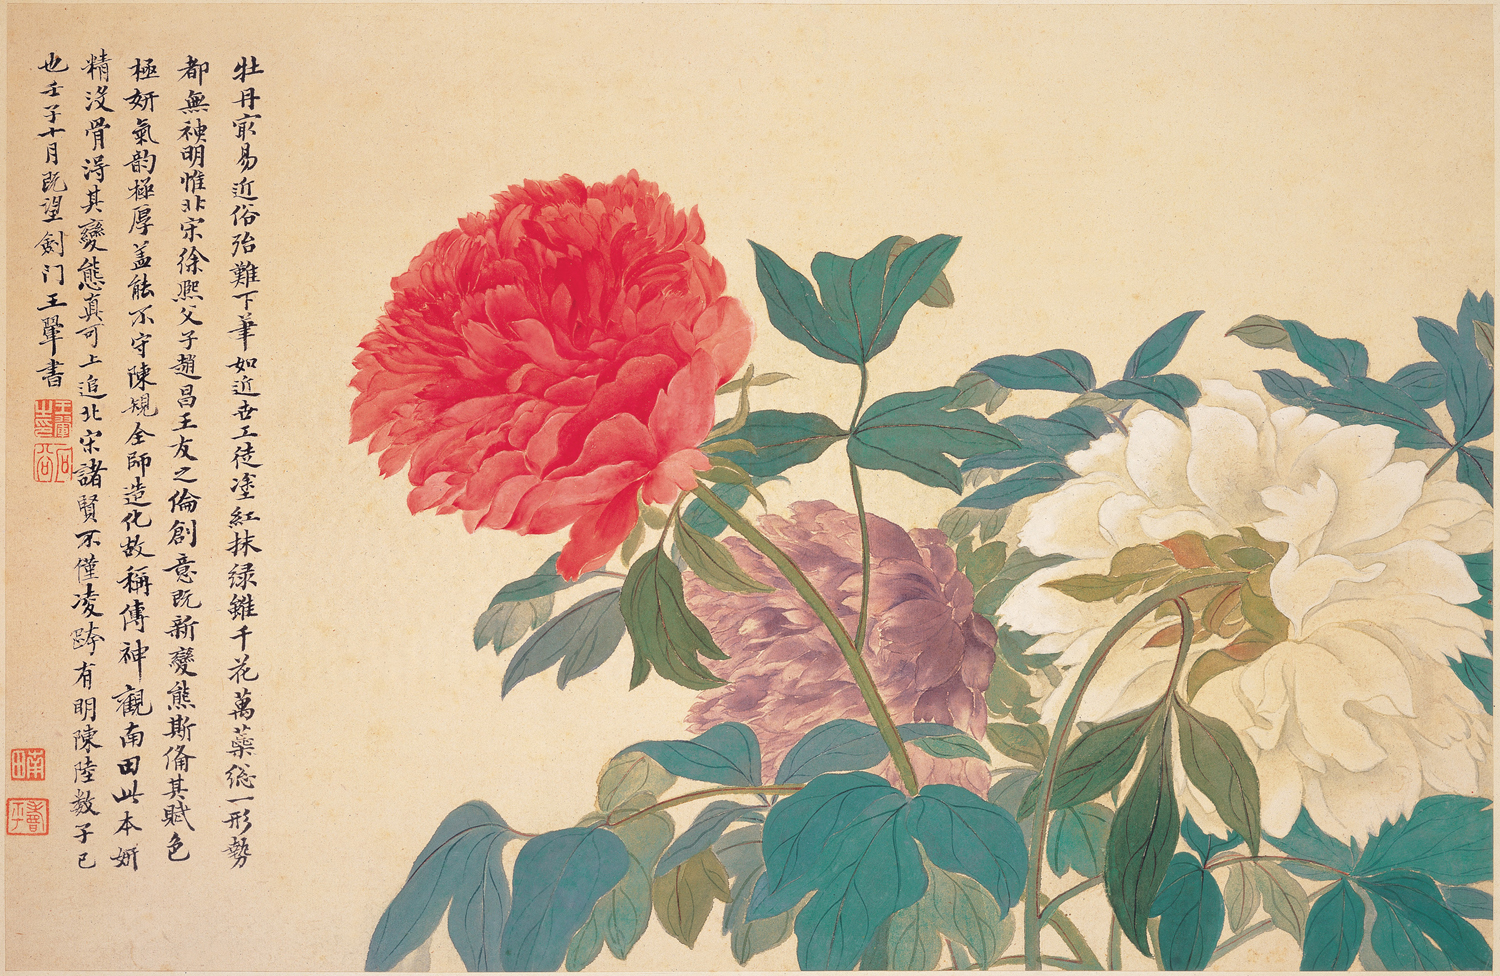 Şakayık by Yun Shou-p'ing - 1672 - 28.5 x 43.0 cm 